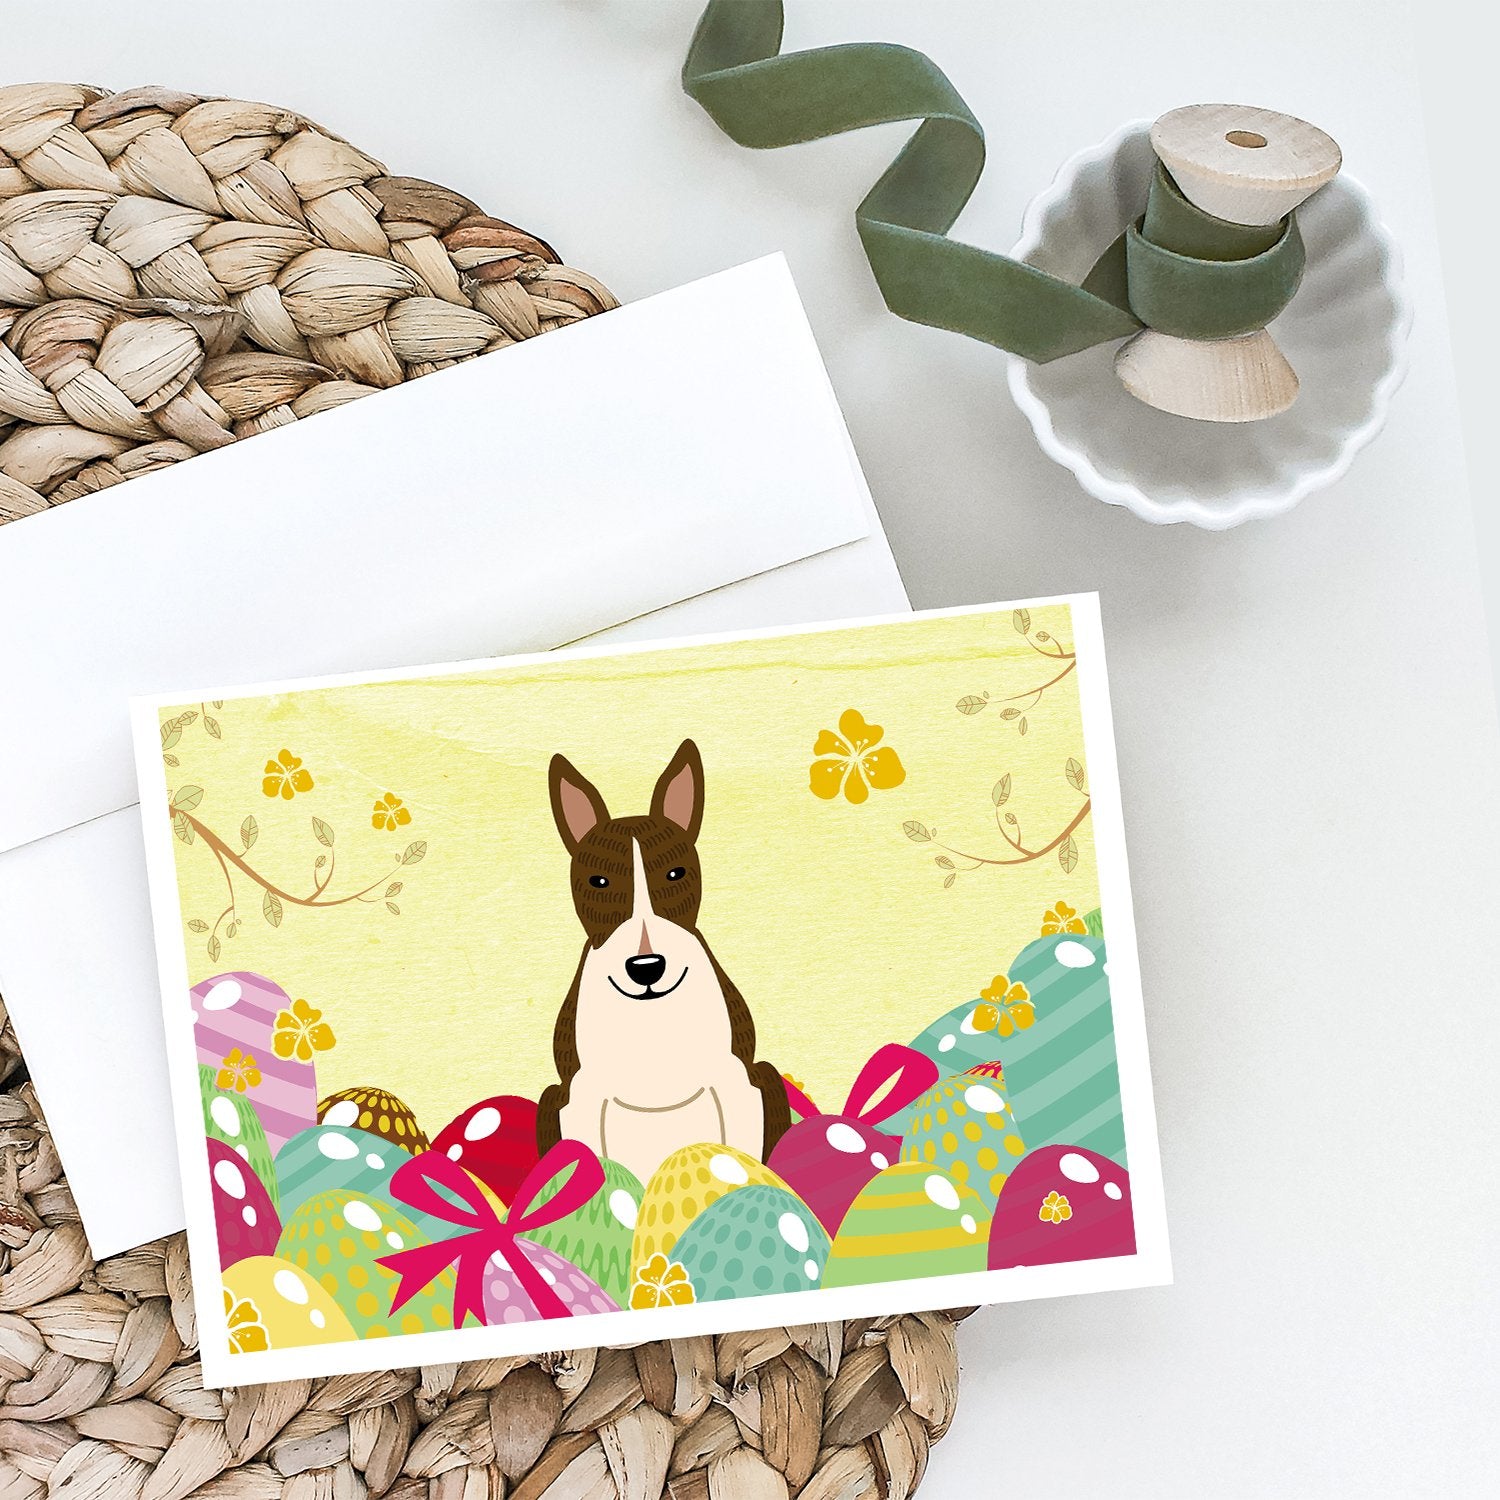 Buy this Easter Eggs Bull Terrier Dark Brindle Greeting Cards and Envelopes Pack of 8